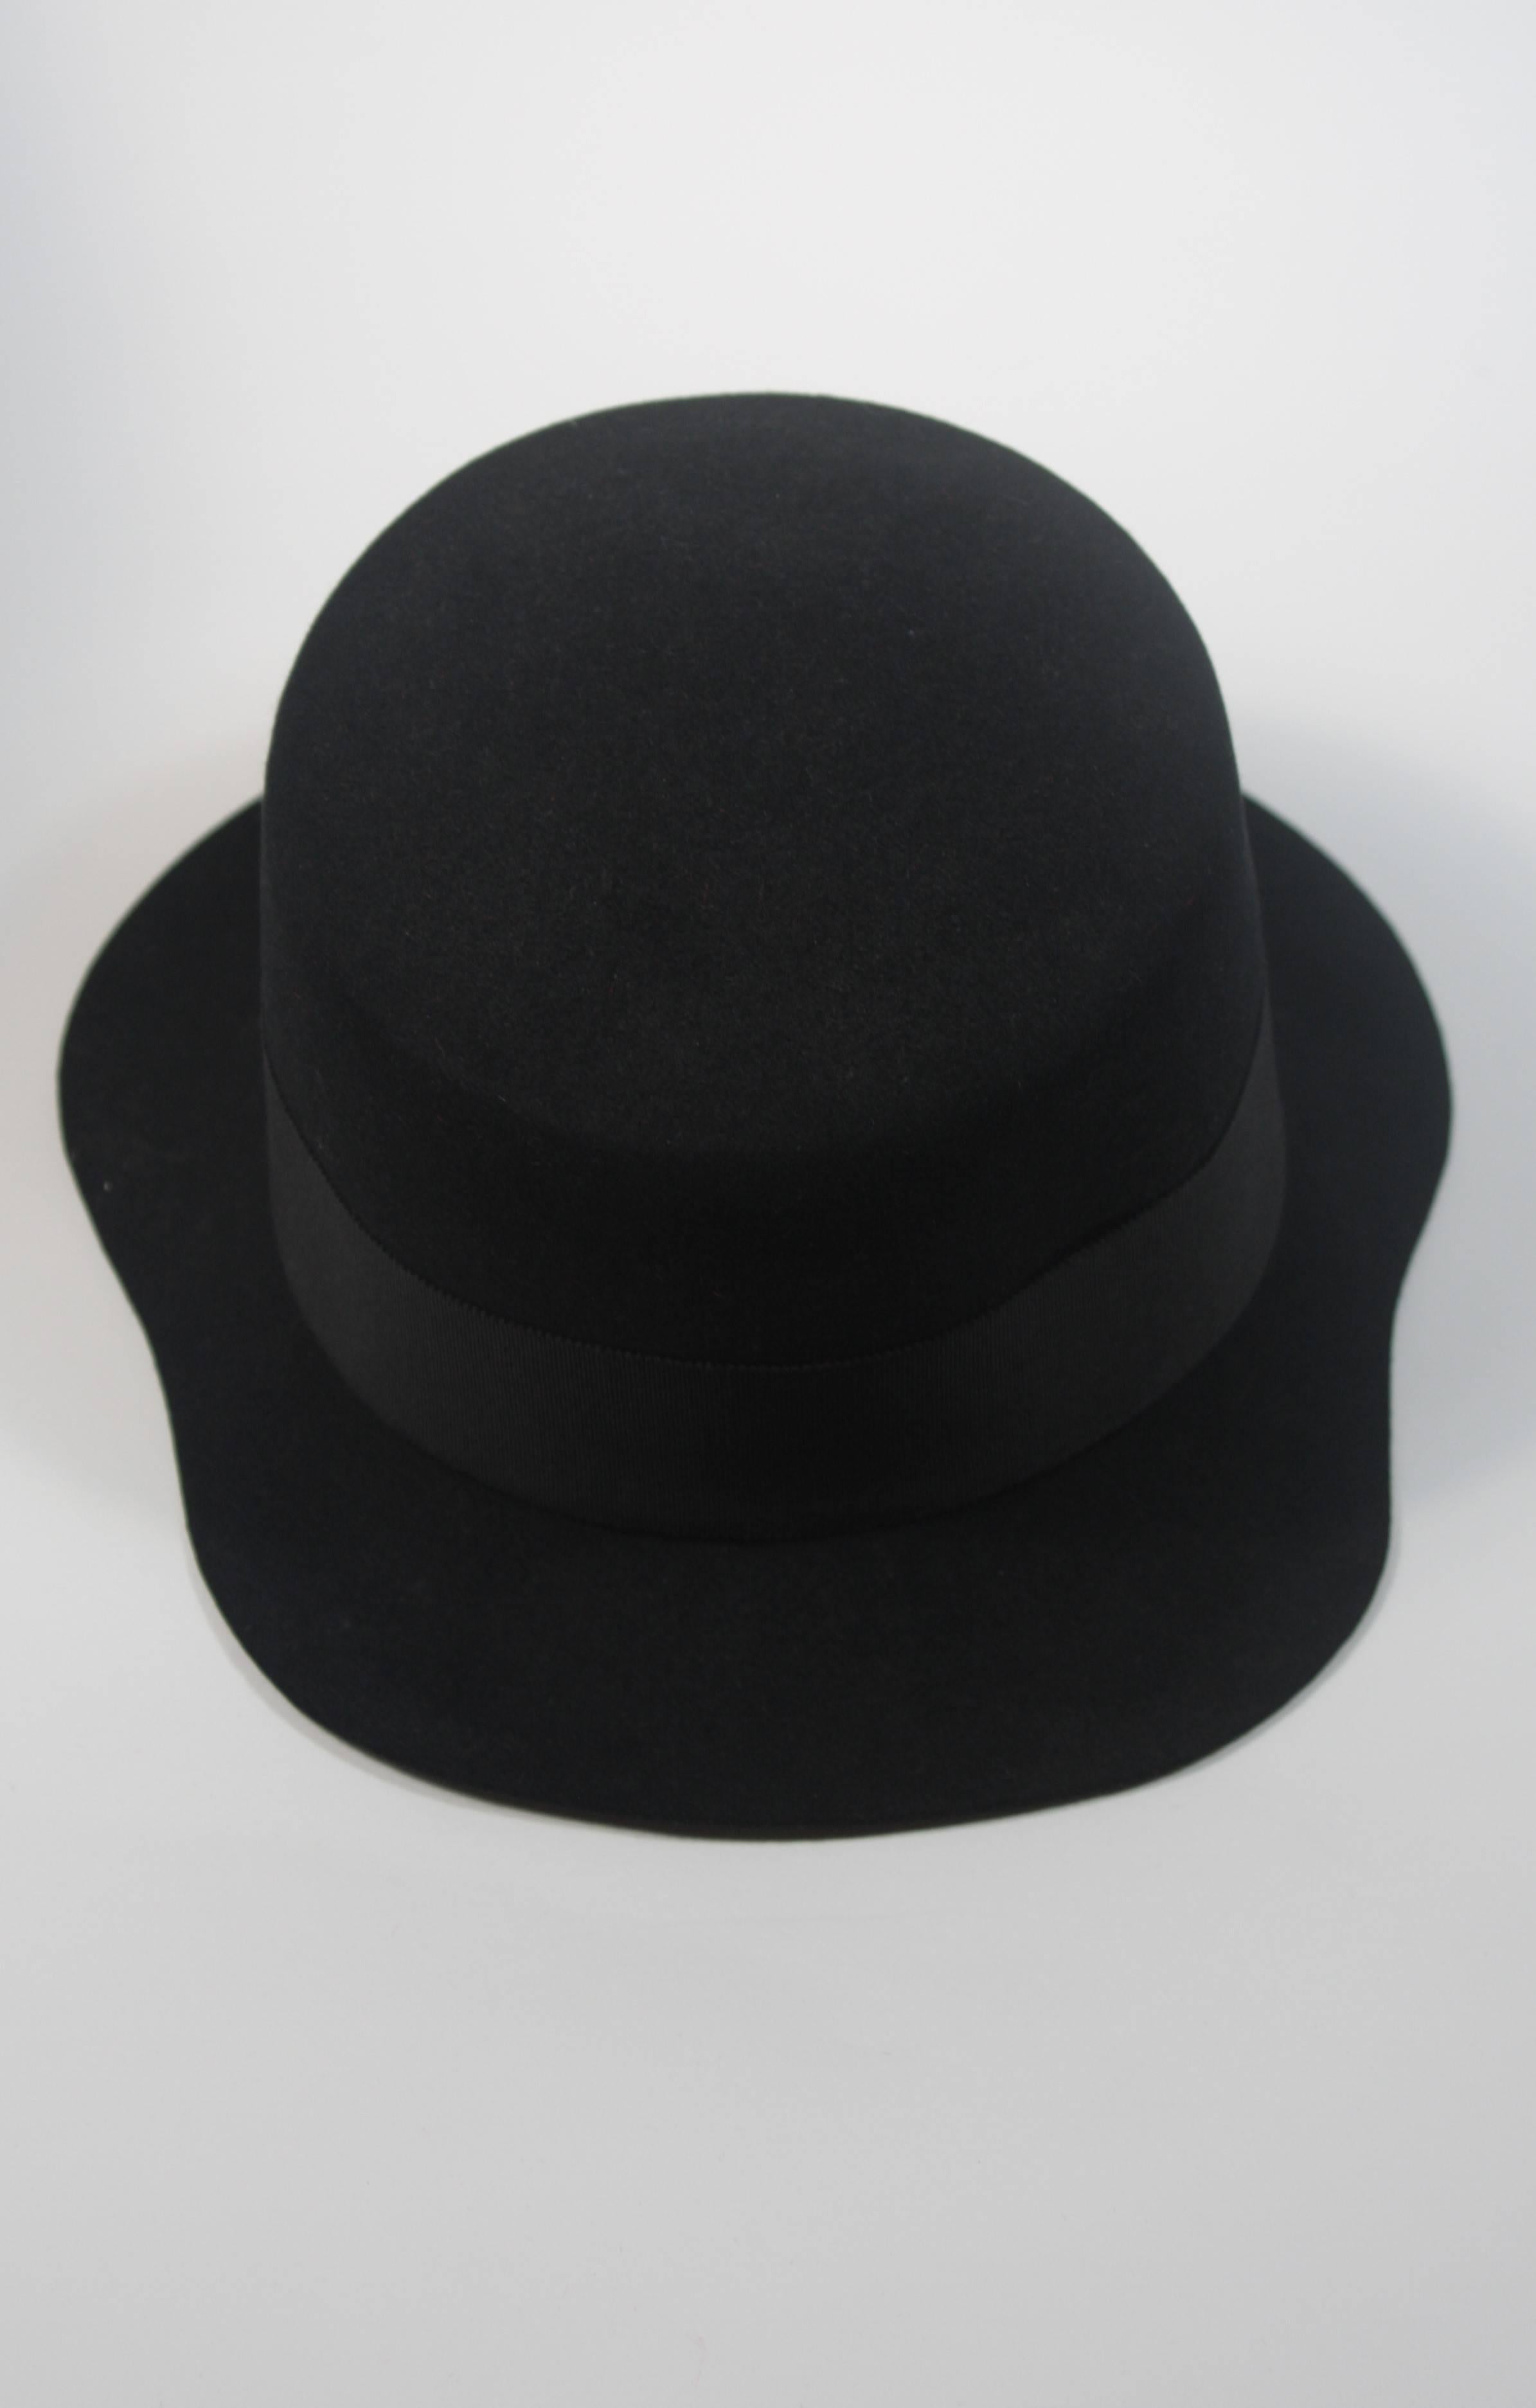 Yves Saint Laurent Rive Gauche 1980's Black Wool Felt Hat with Curved Brim 59 3